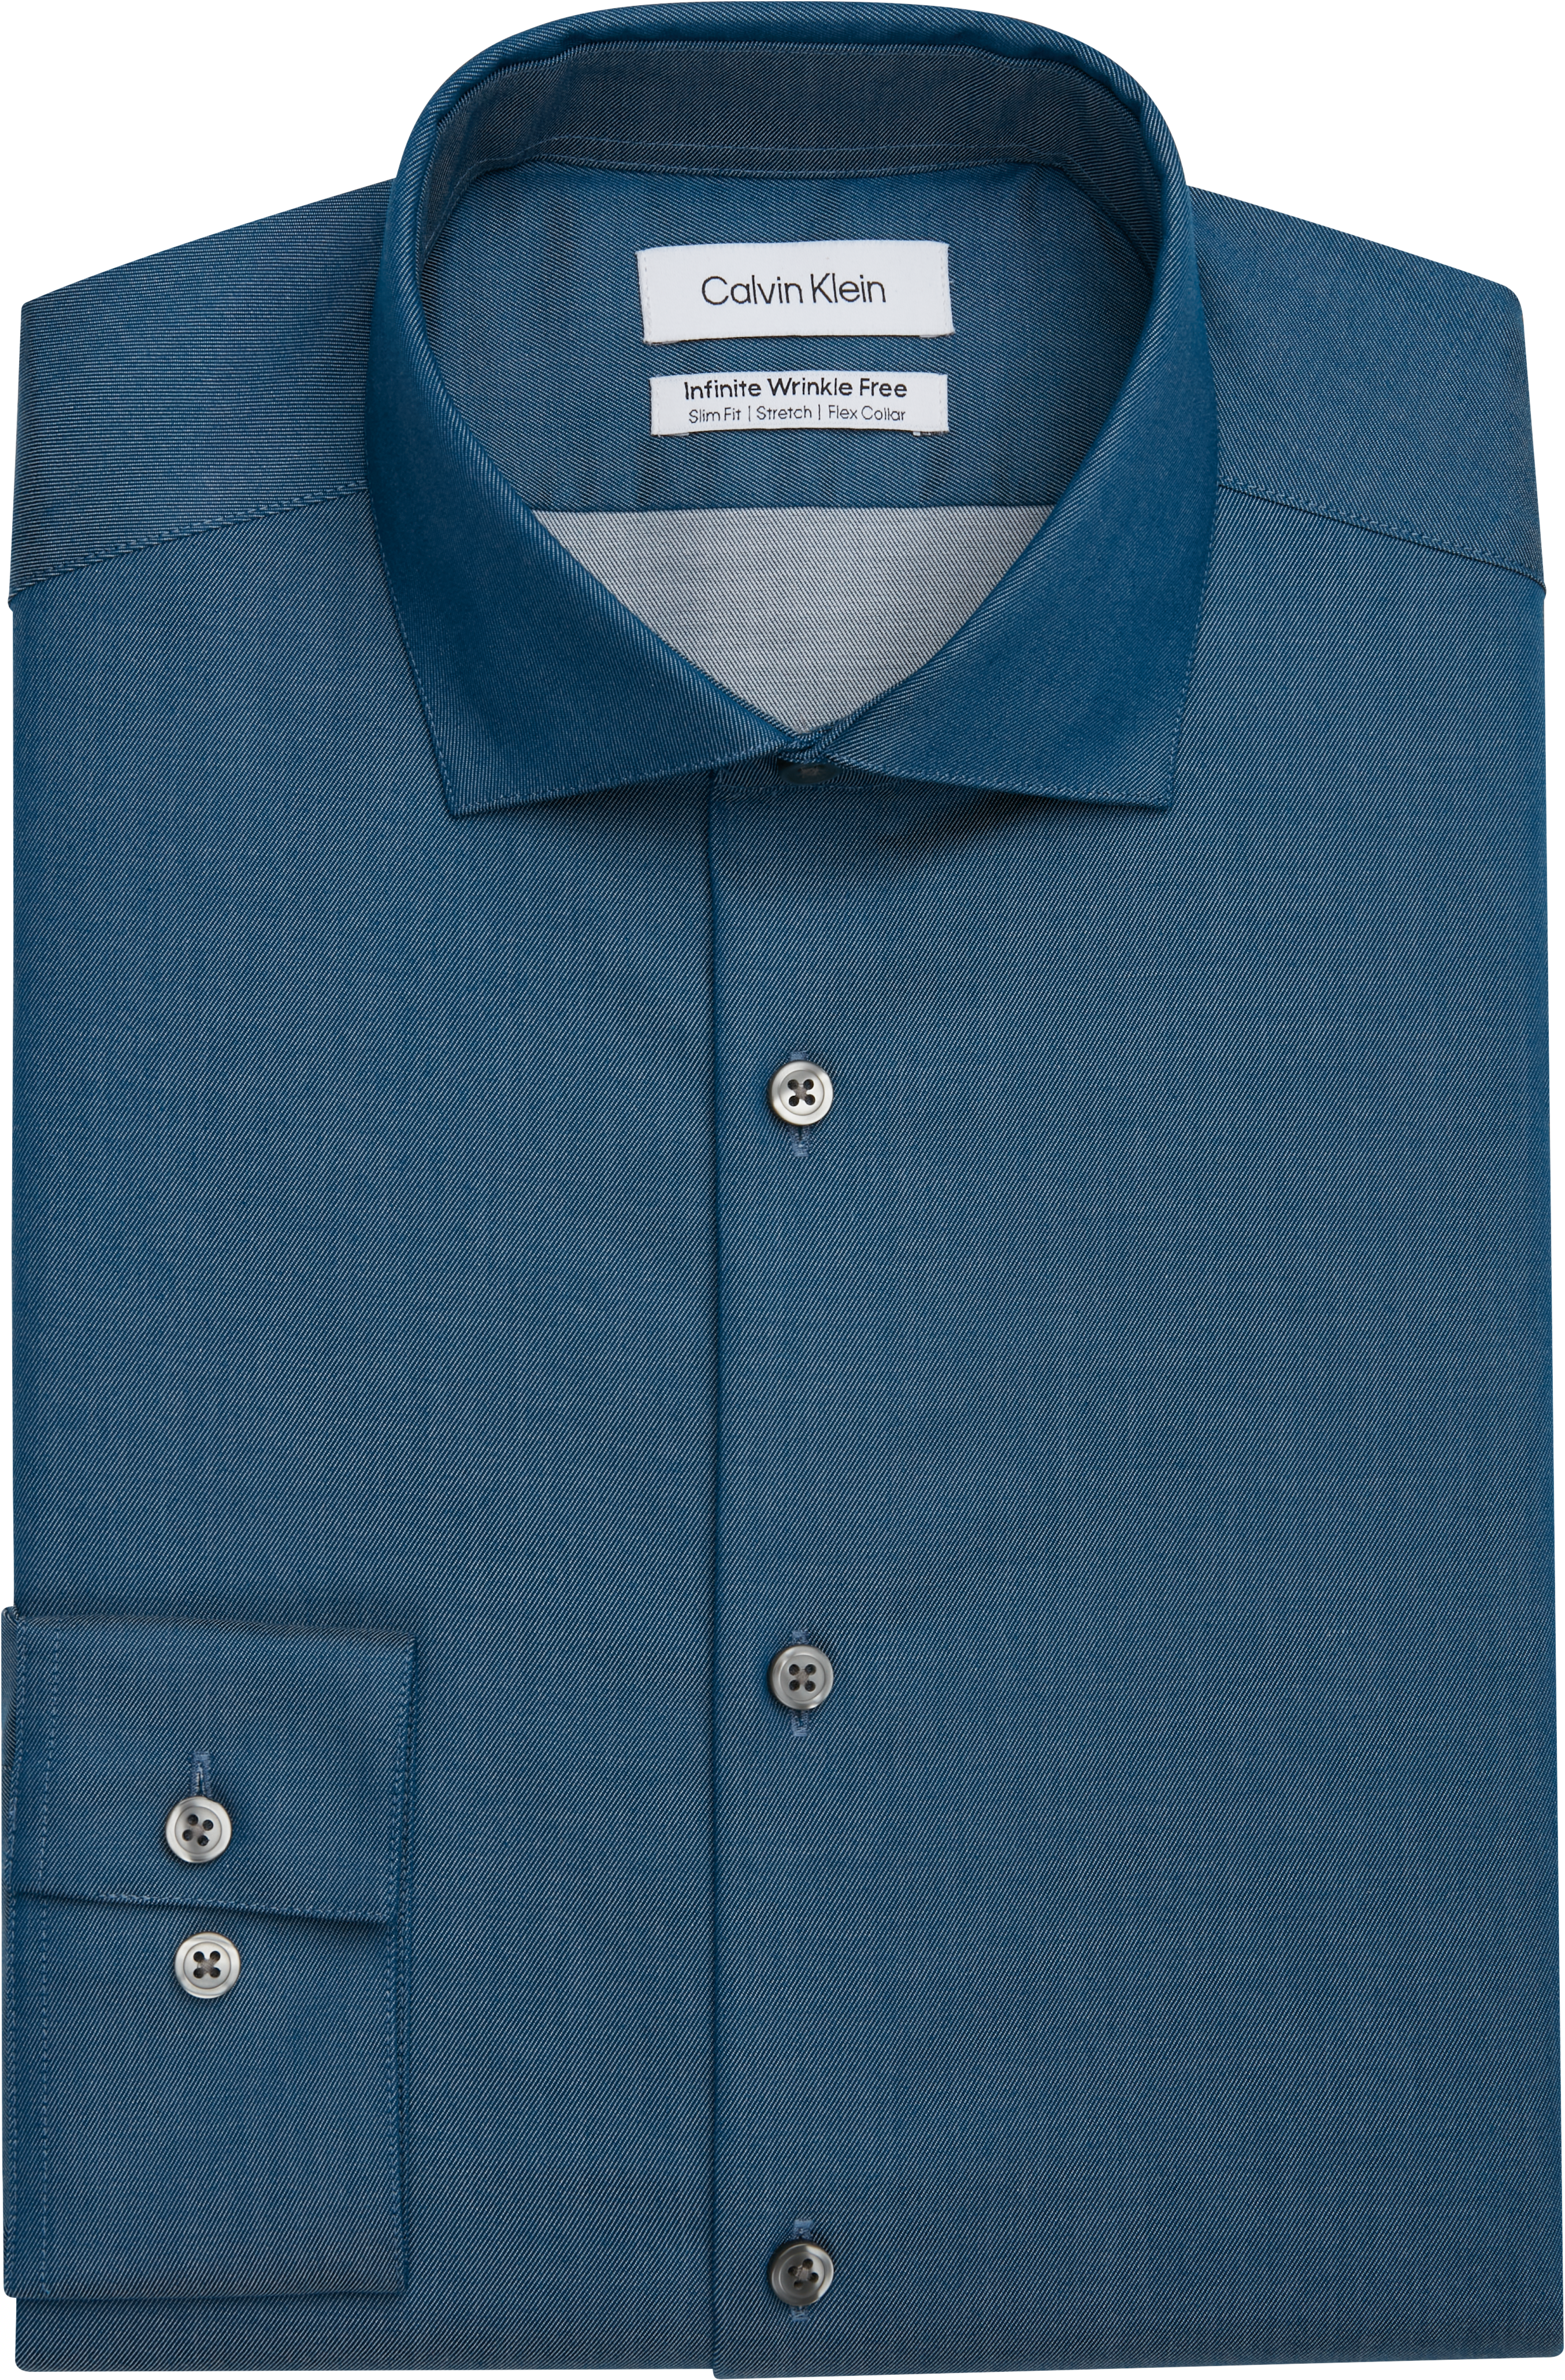 Calvin Klein Infinite Slim Fit Spread Collar Dress Shirt, Blue - Men's ...